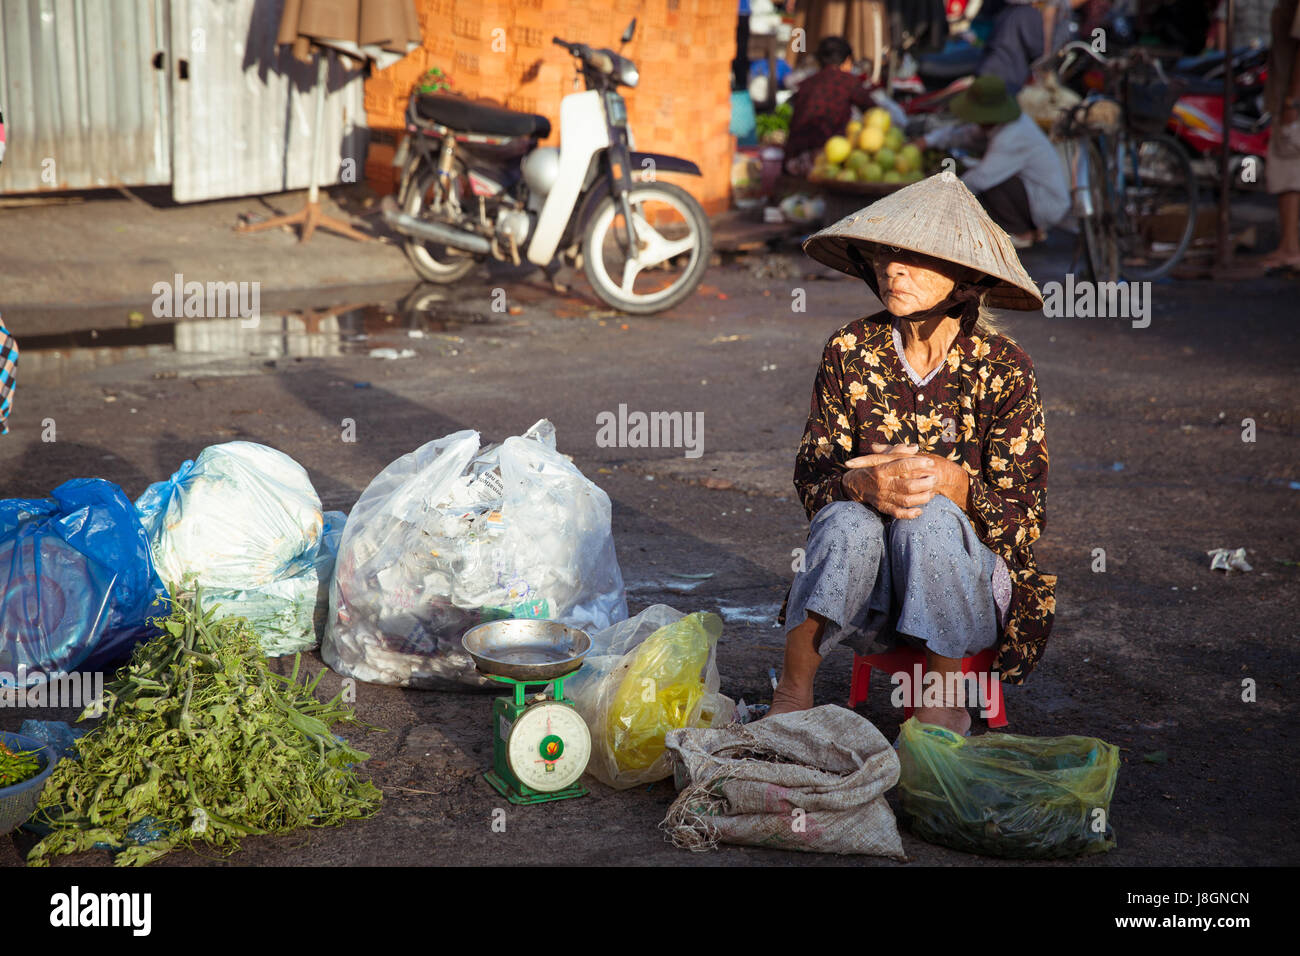 Nha Trang, Vietnam - December 02, 2015: Old vietnamese woman is selling vegetables at the street market, Nha Trang, Vietnam on December 02, 2015. Stock Photo